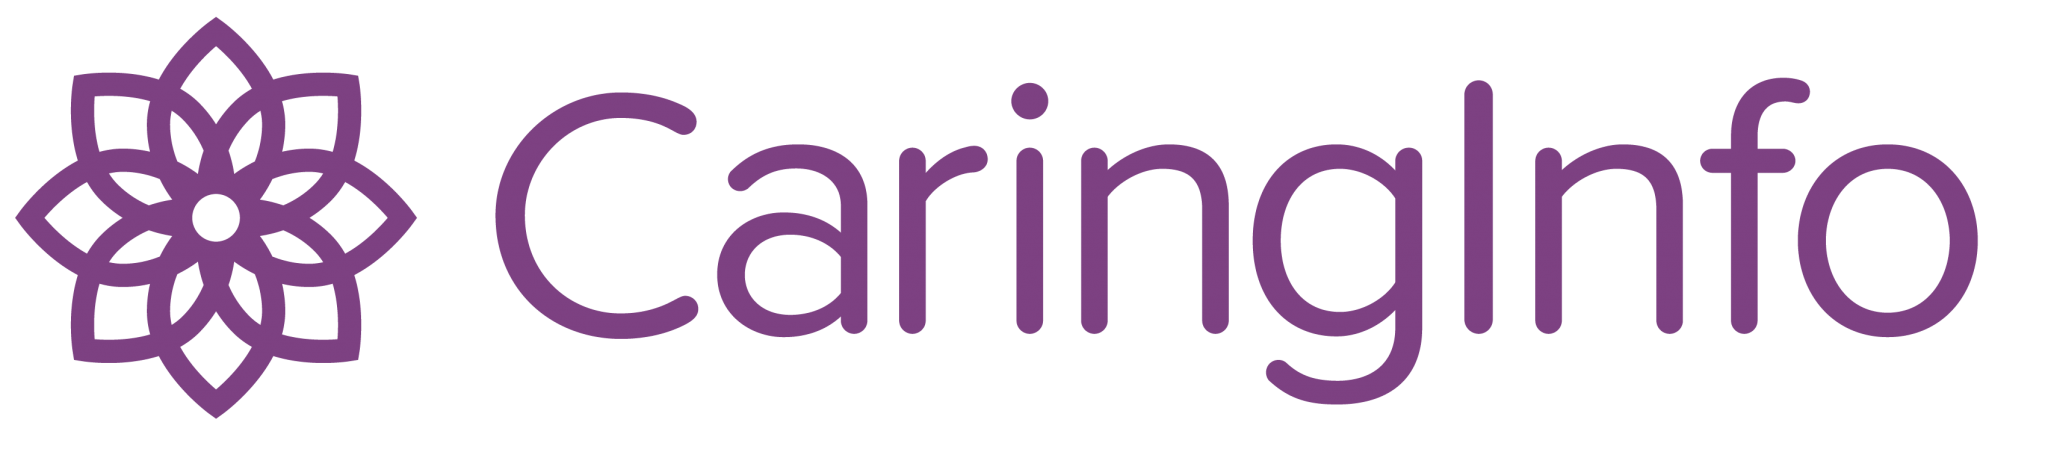 caringinfo logo purple3x 2048x449